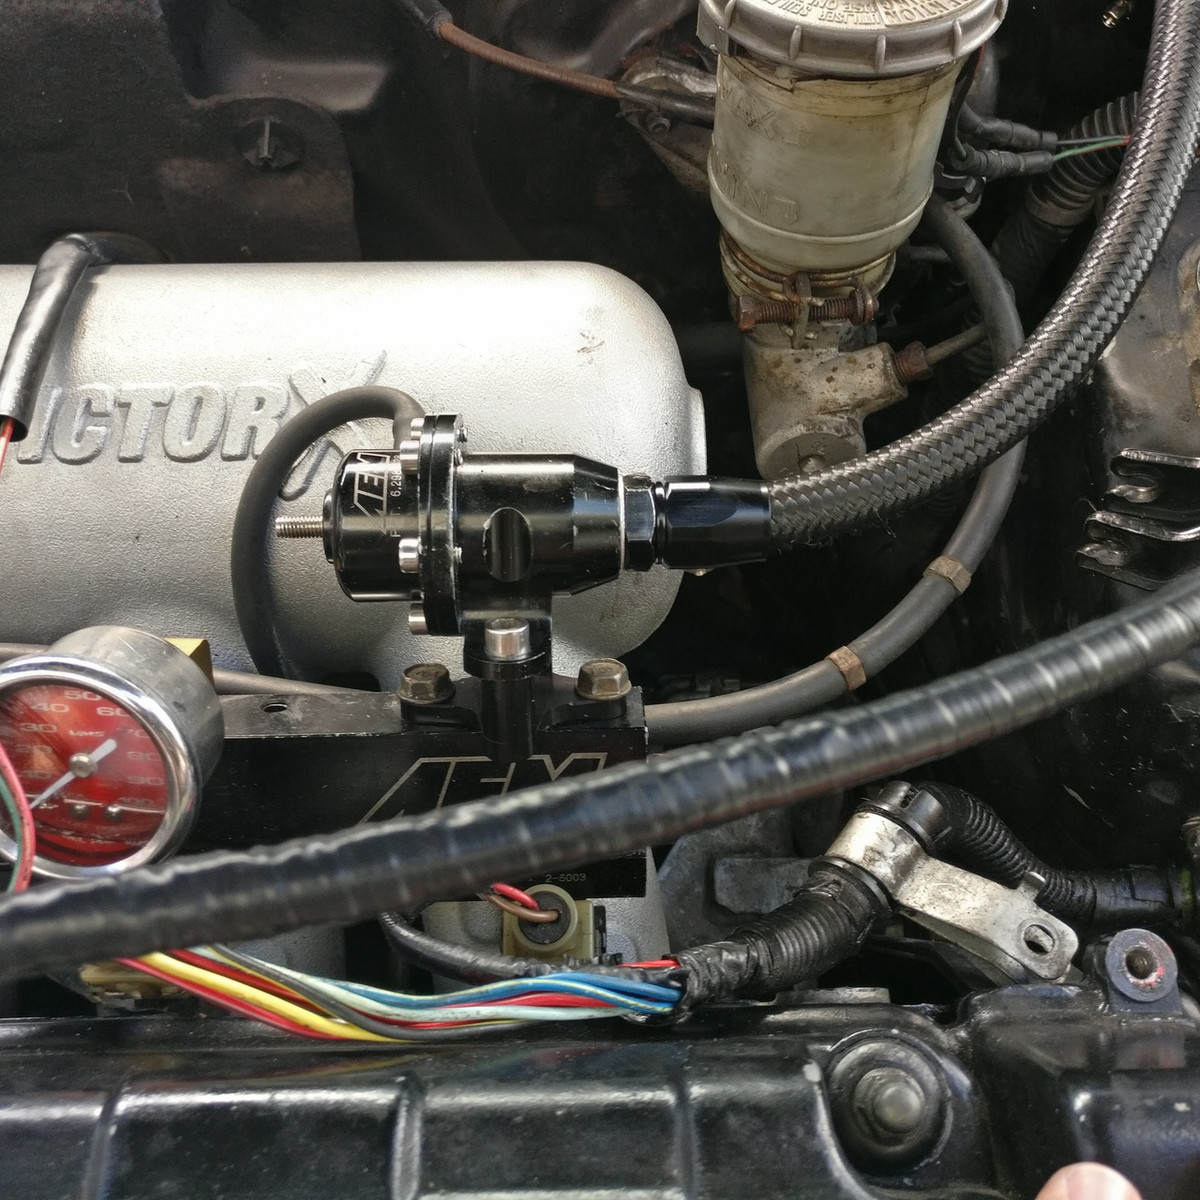 Chevrolet Fuel Filter Location - Wiring Diagram 2015 Chevy 2500hd 6.0 Fuel Filter Location